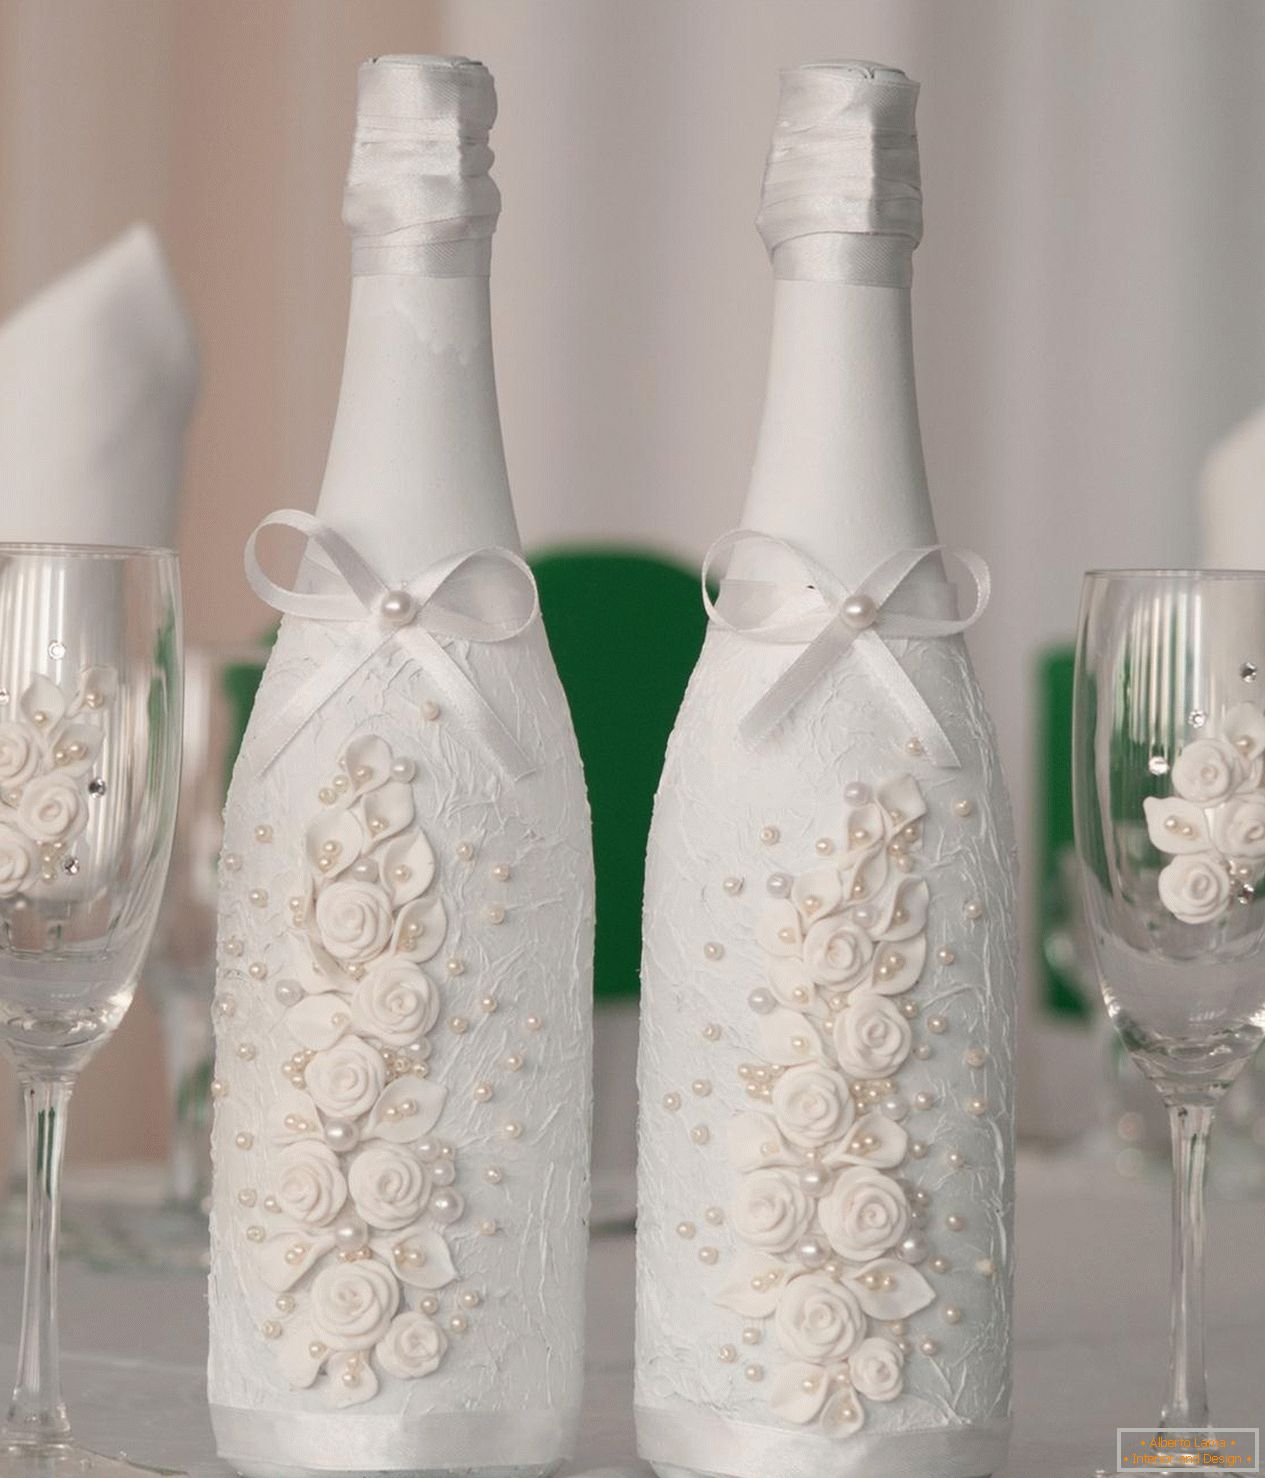 Stylish design of bottles and glasses